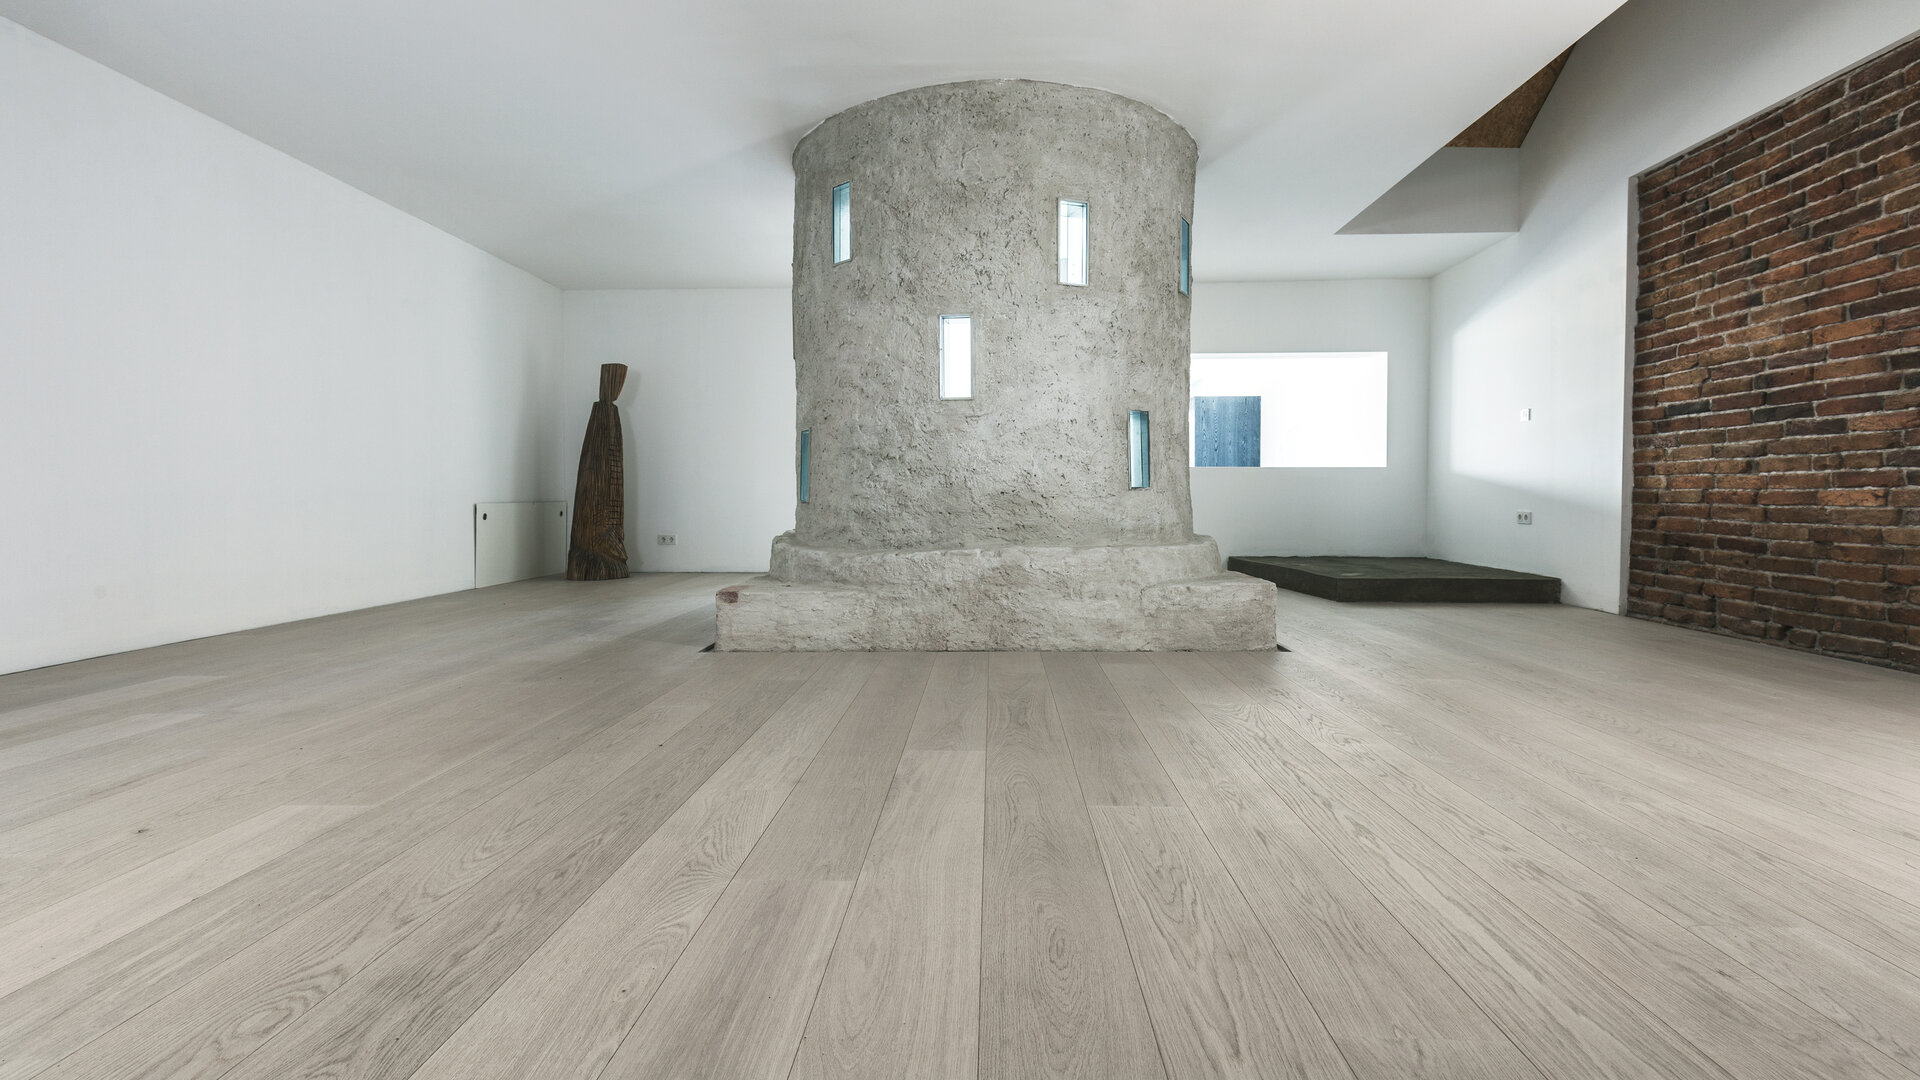 TRAPA Plank floor 
Oak calm brushed Carrara